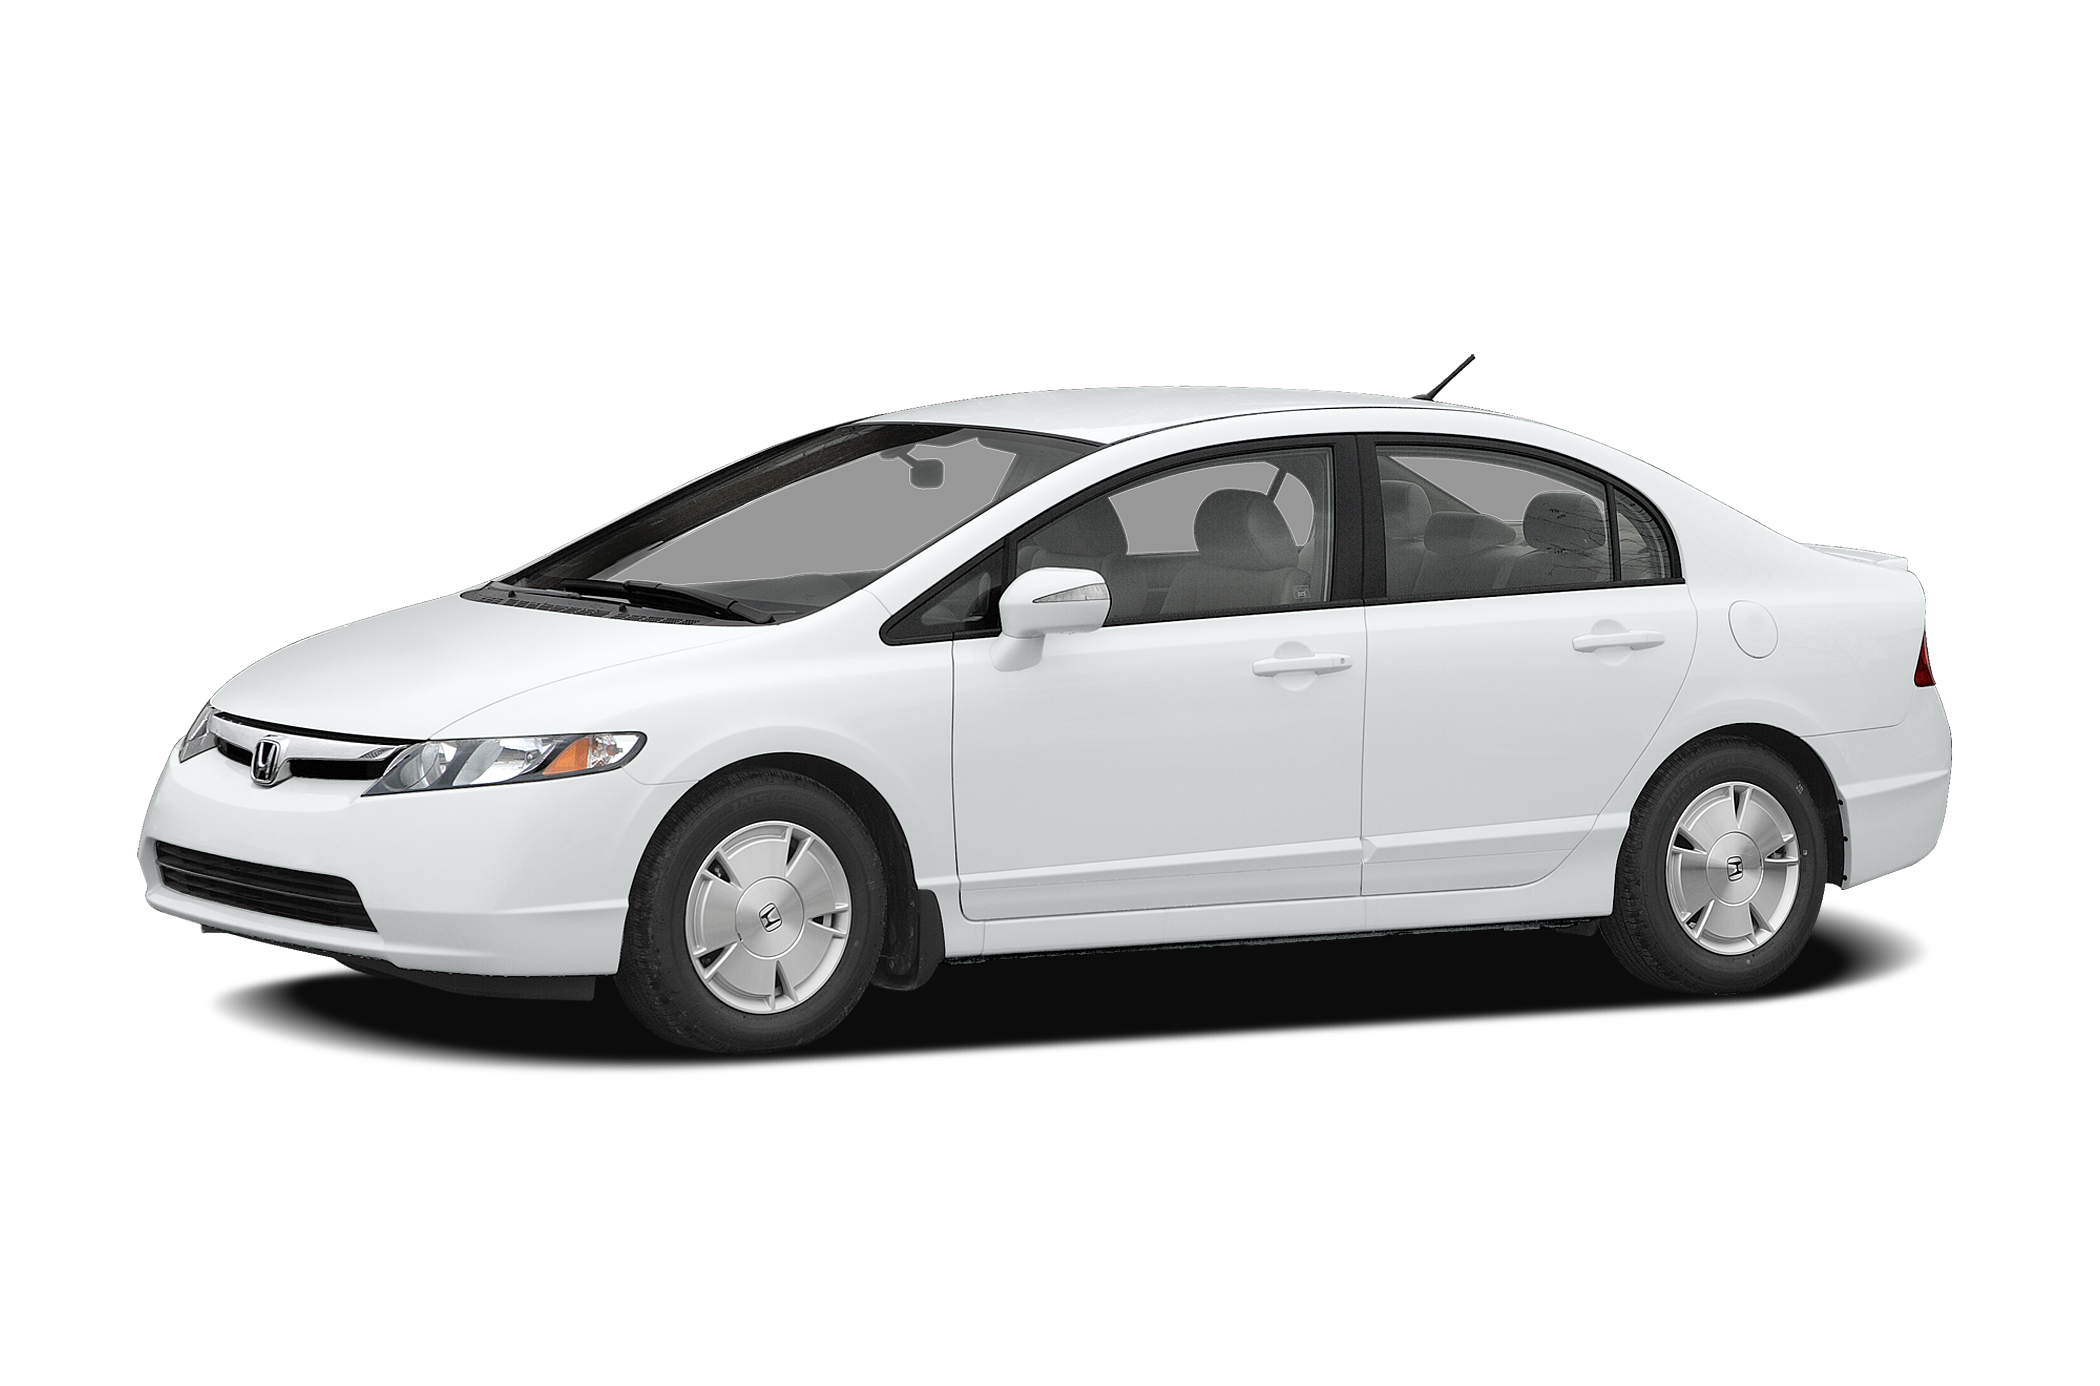 2007 Honda Civic Hybrid - View Specs, Prices & Photos - WHEELS.ca